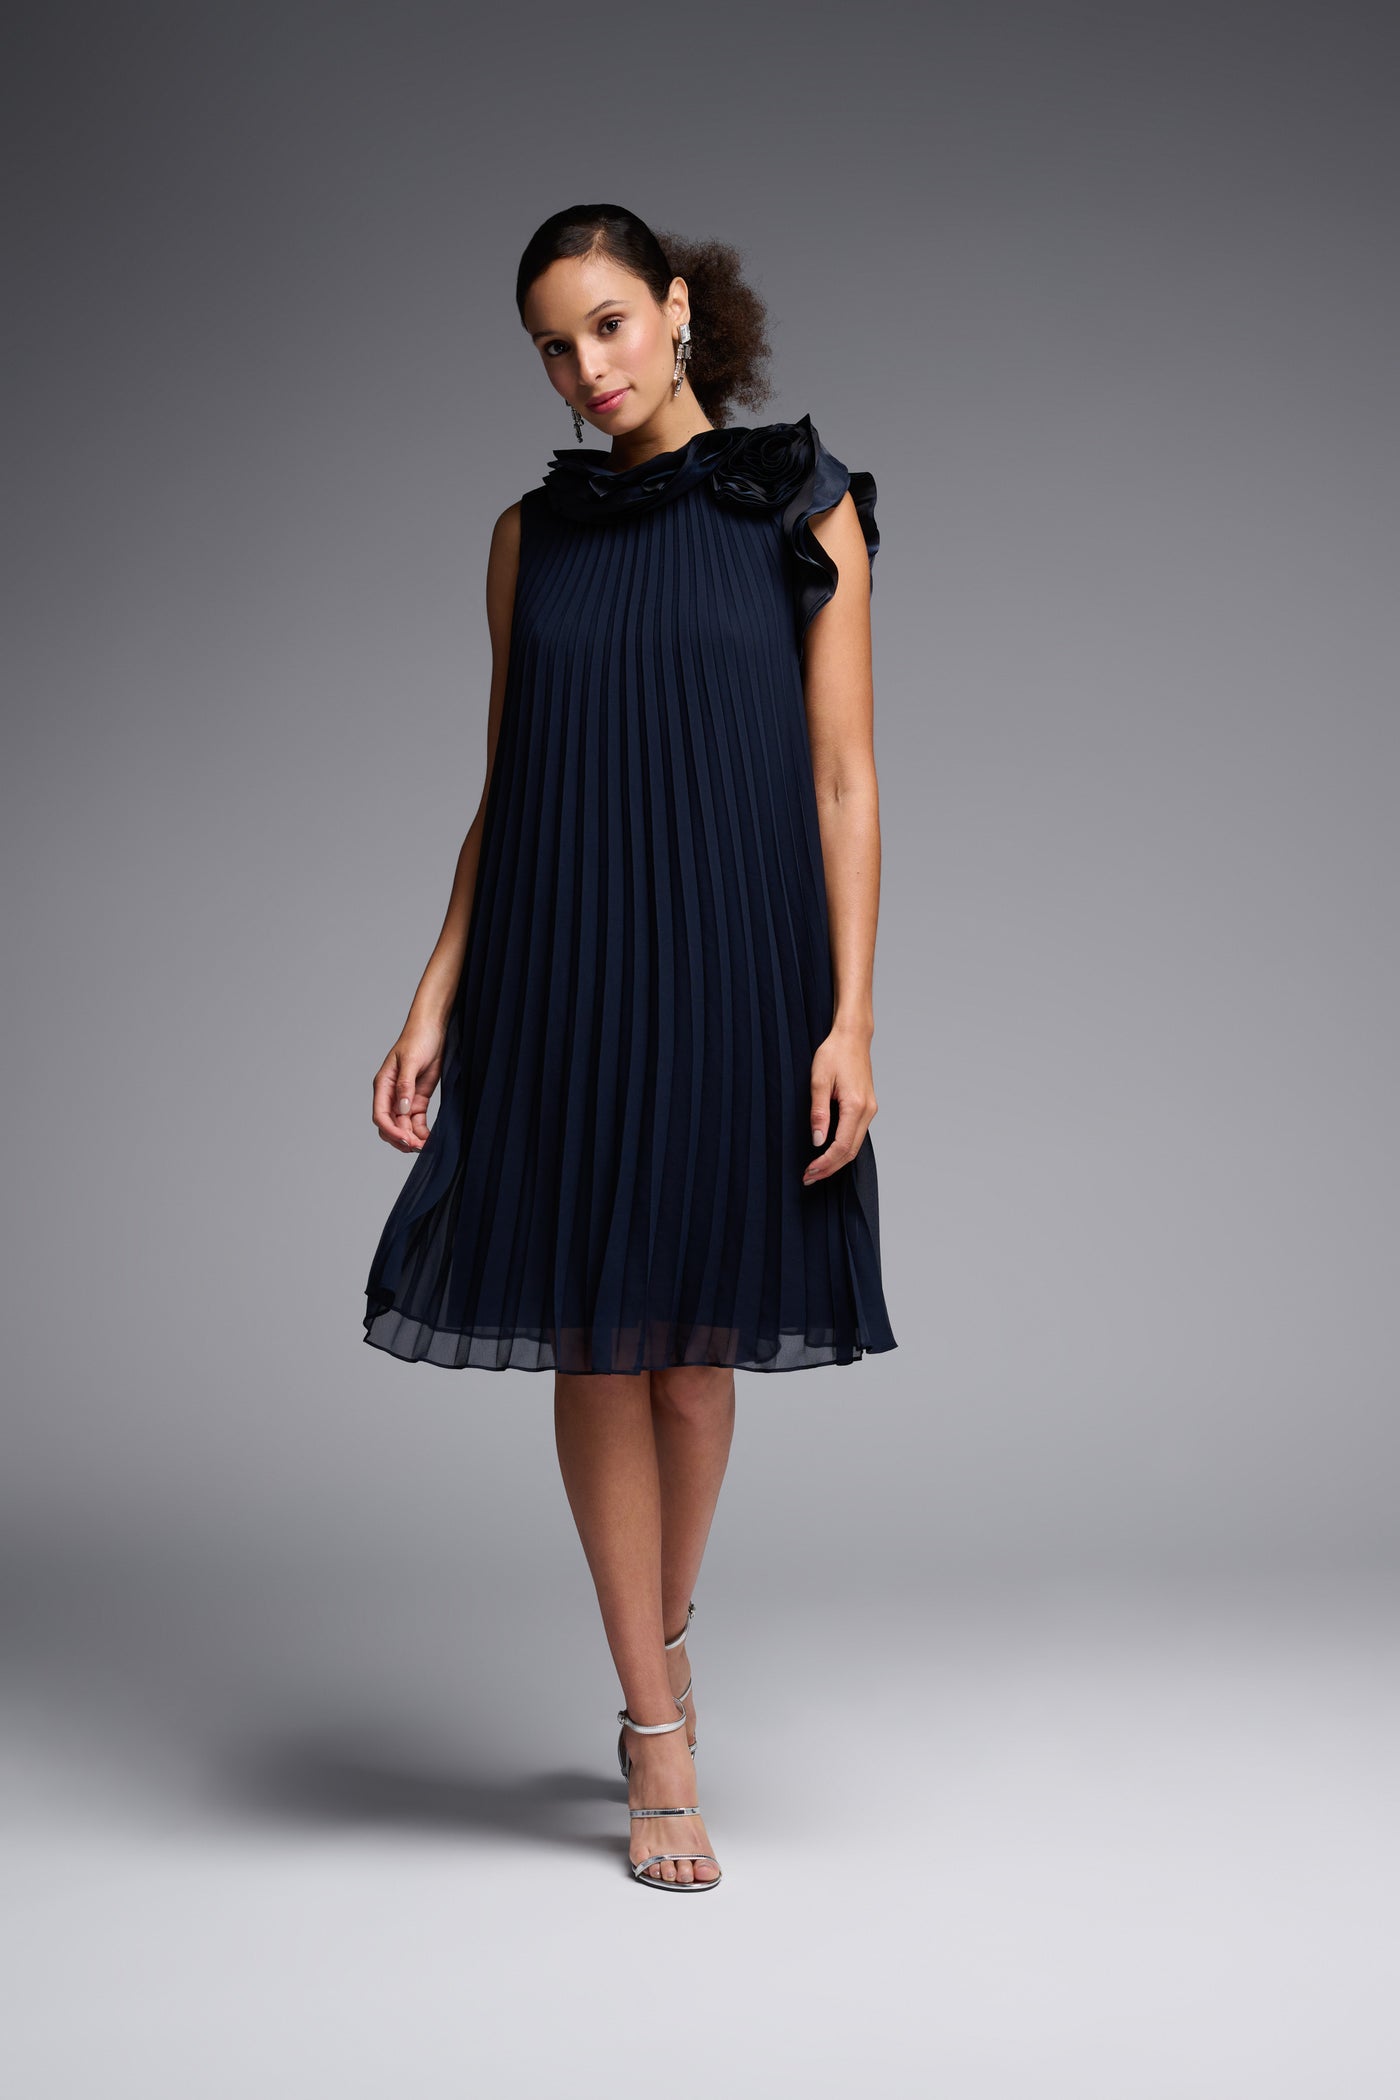 Pleated Dress - Black 223728 Size 6